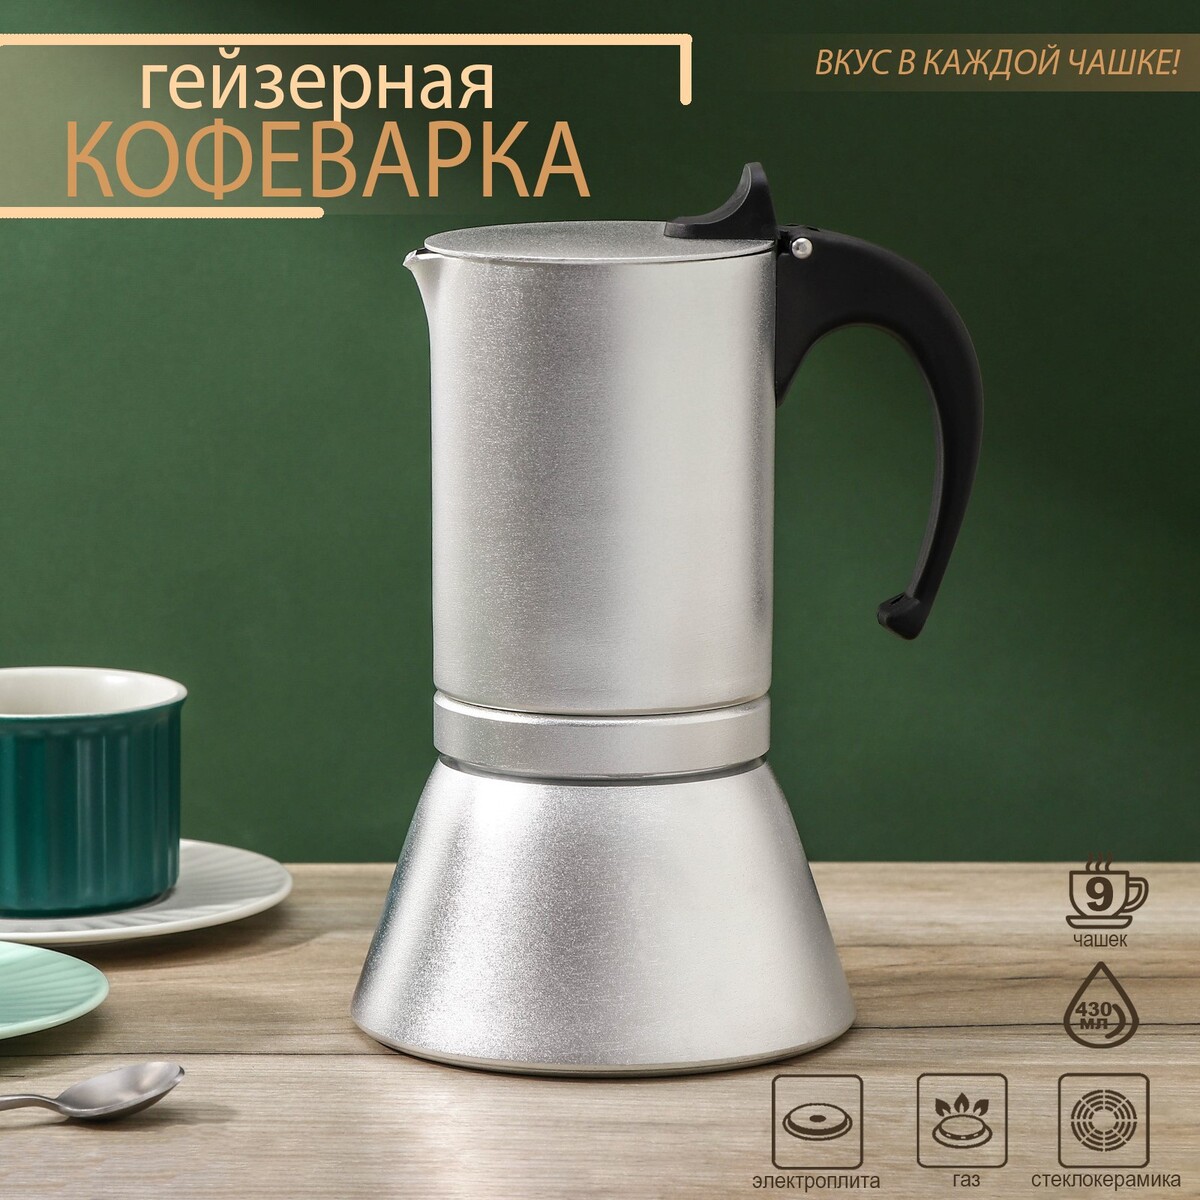 Кофеварка гейзерная magistro salem, на 9 чашек, 430 мл, индукция кофеварка гейзерная rommelsbacher eko 366 e